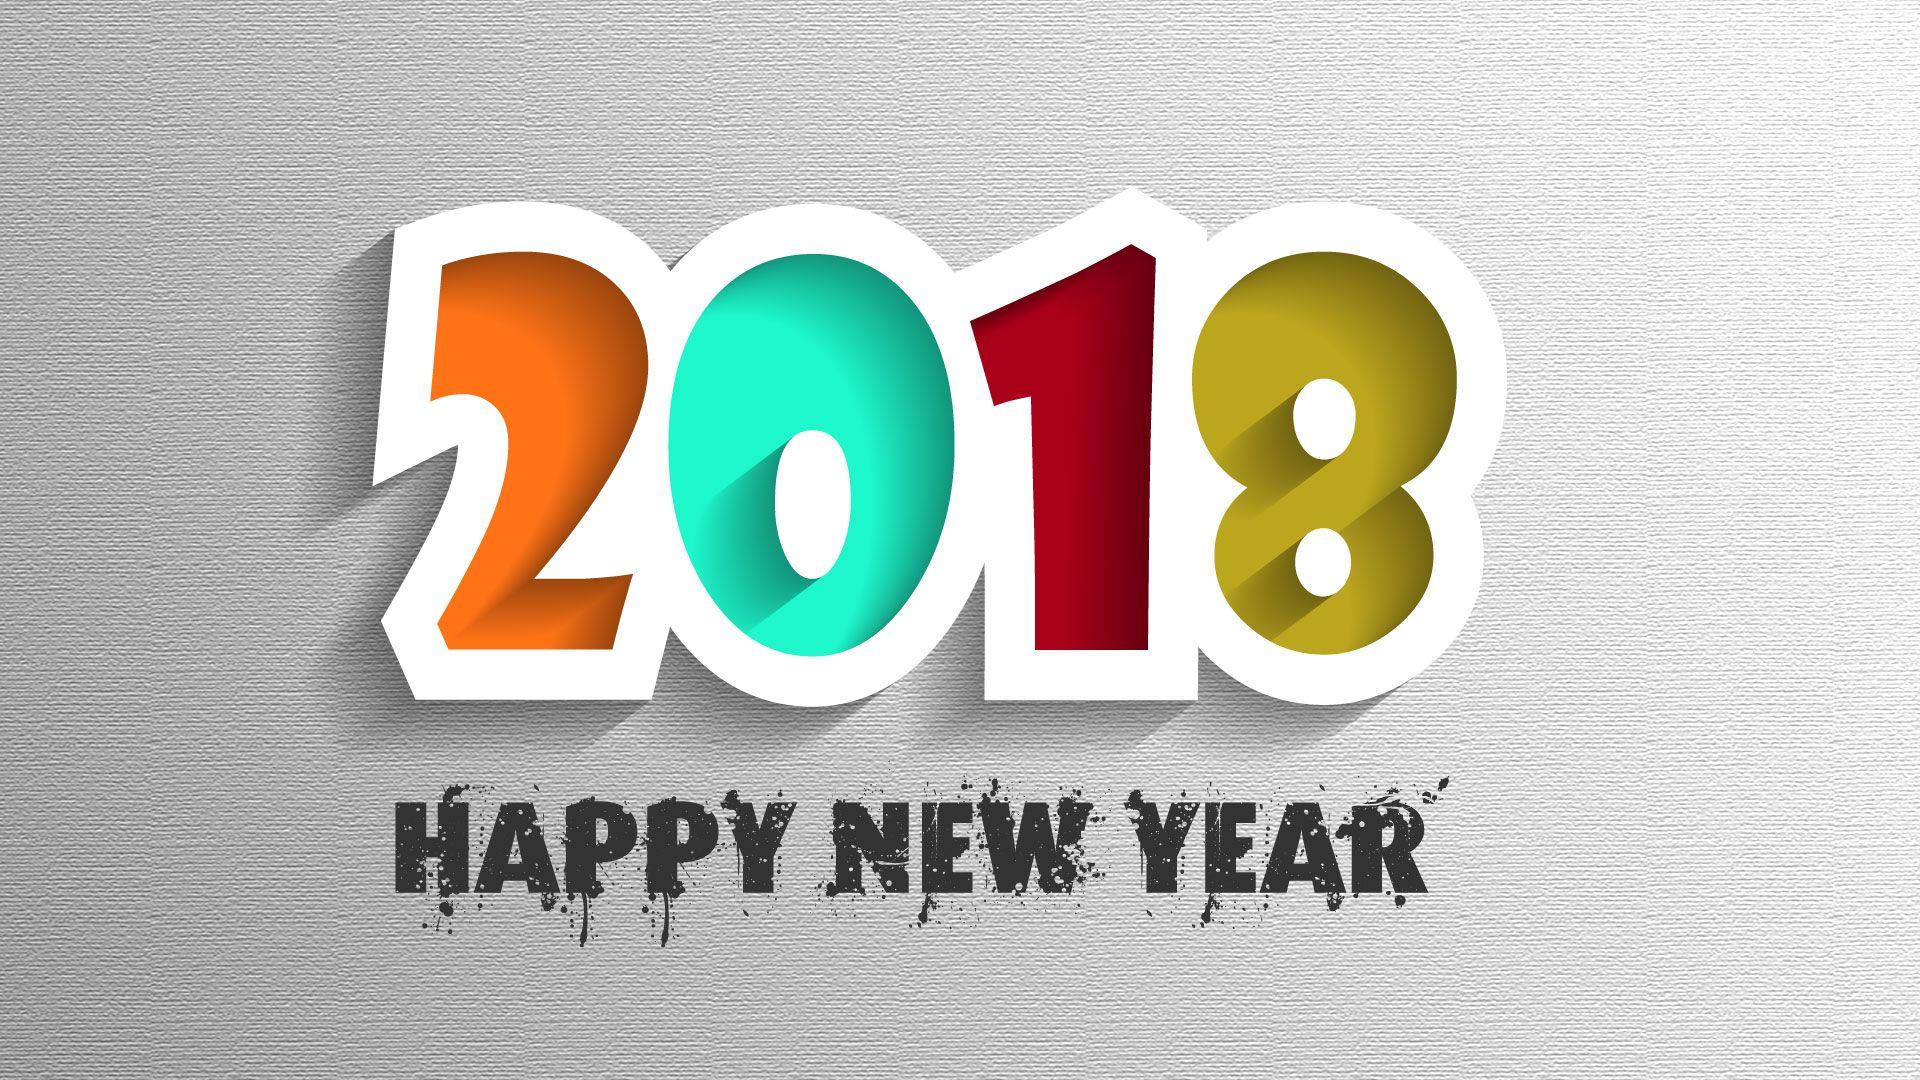 Happy New Year 2018 Wallpaper, New Year HD Wallpaper Image